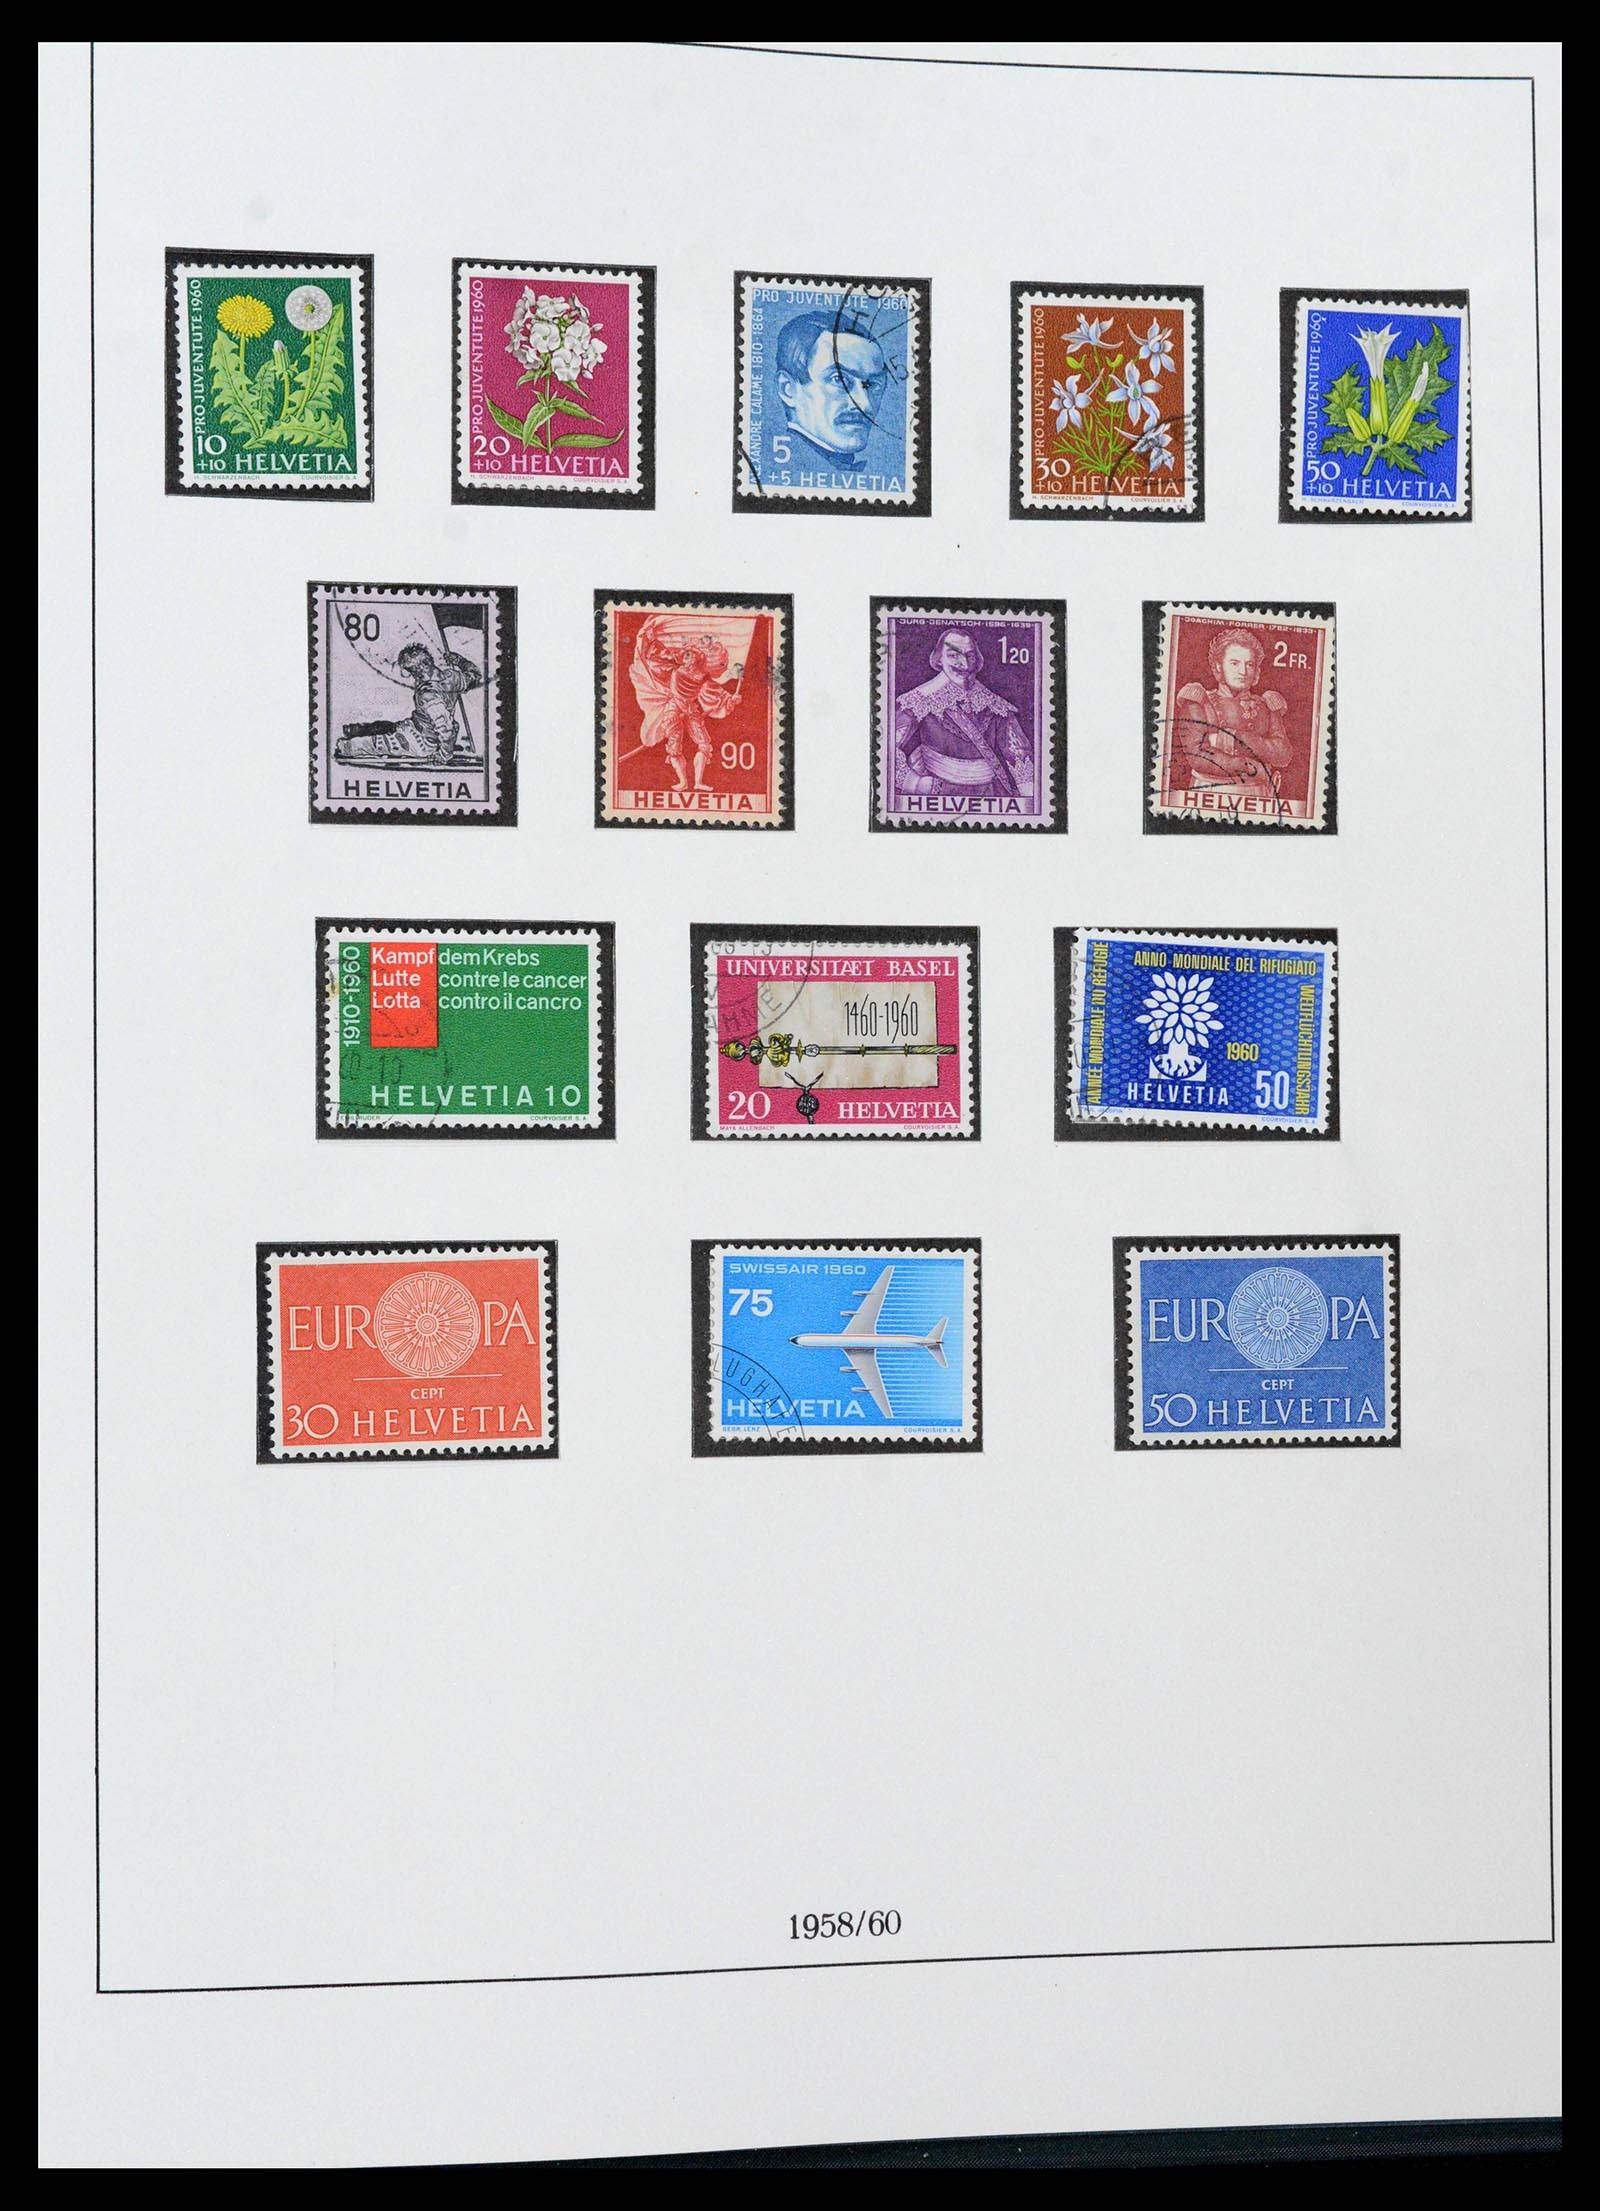 39235 0060 - Stamp collection 39235 Switzerland 1843-1960.